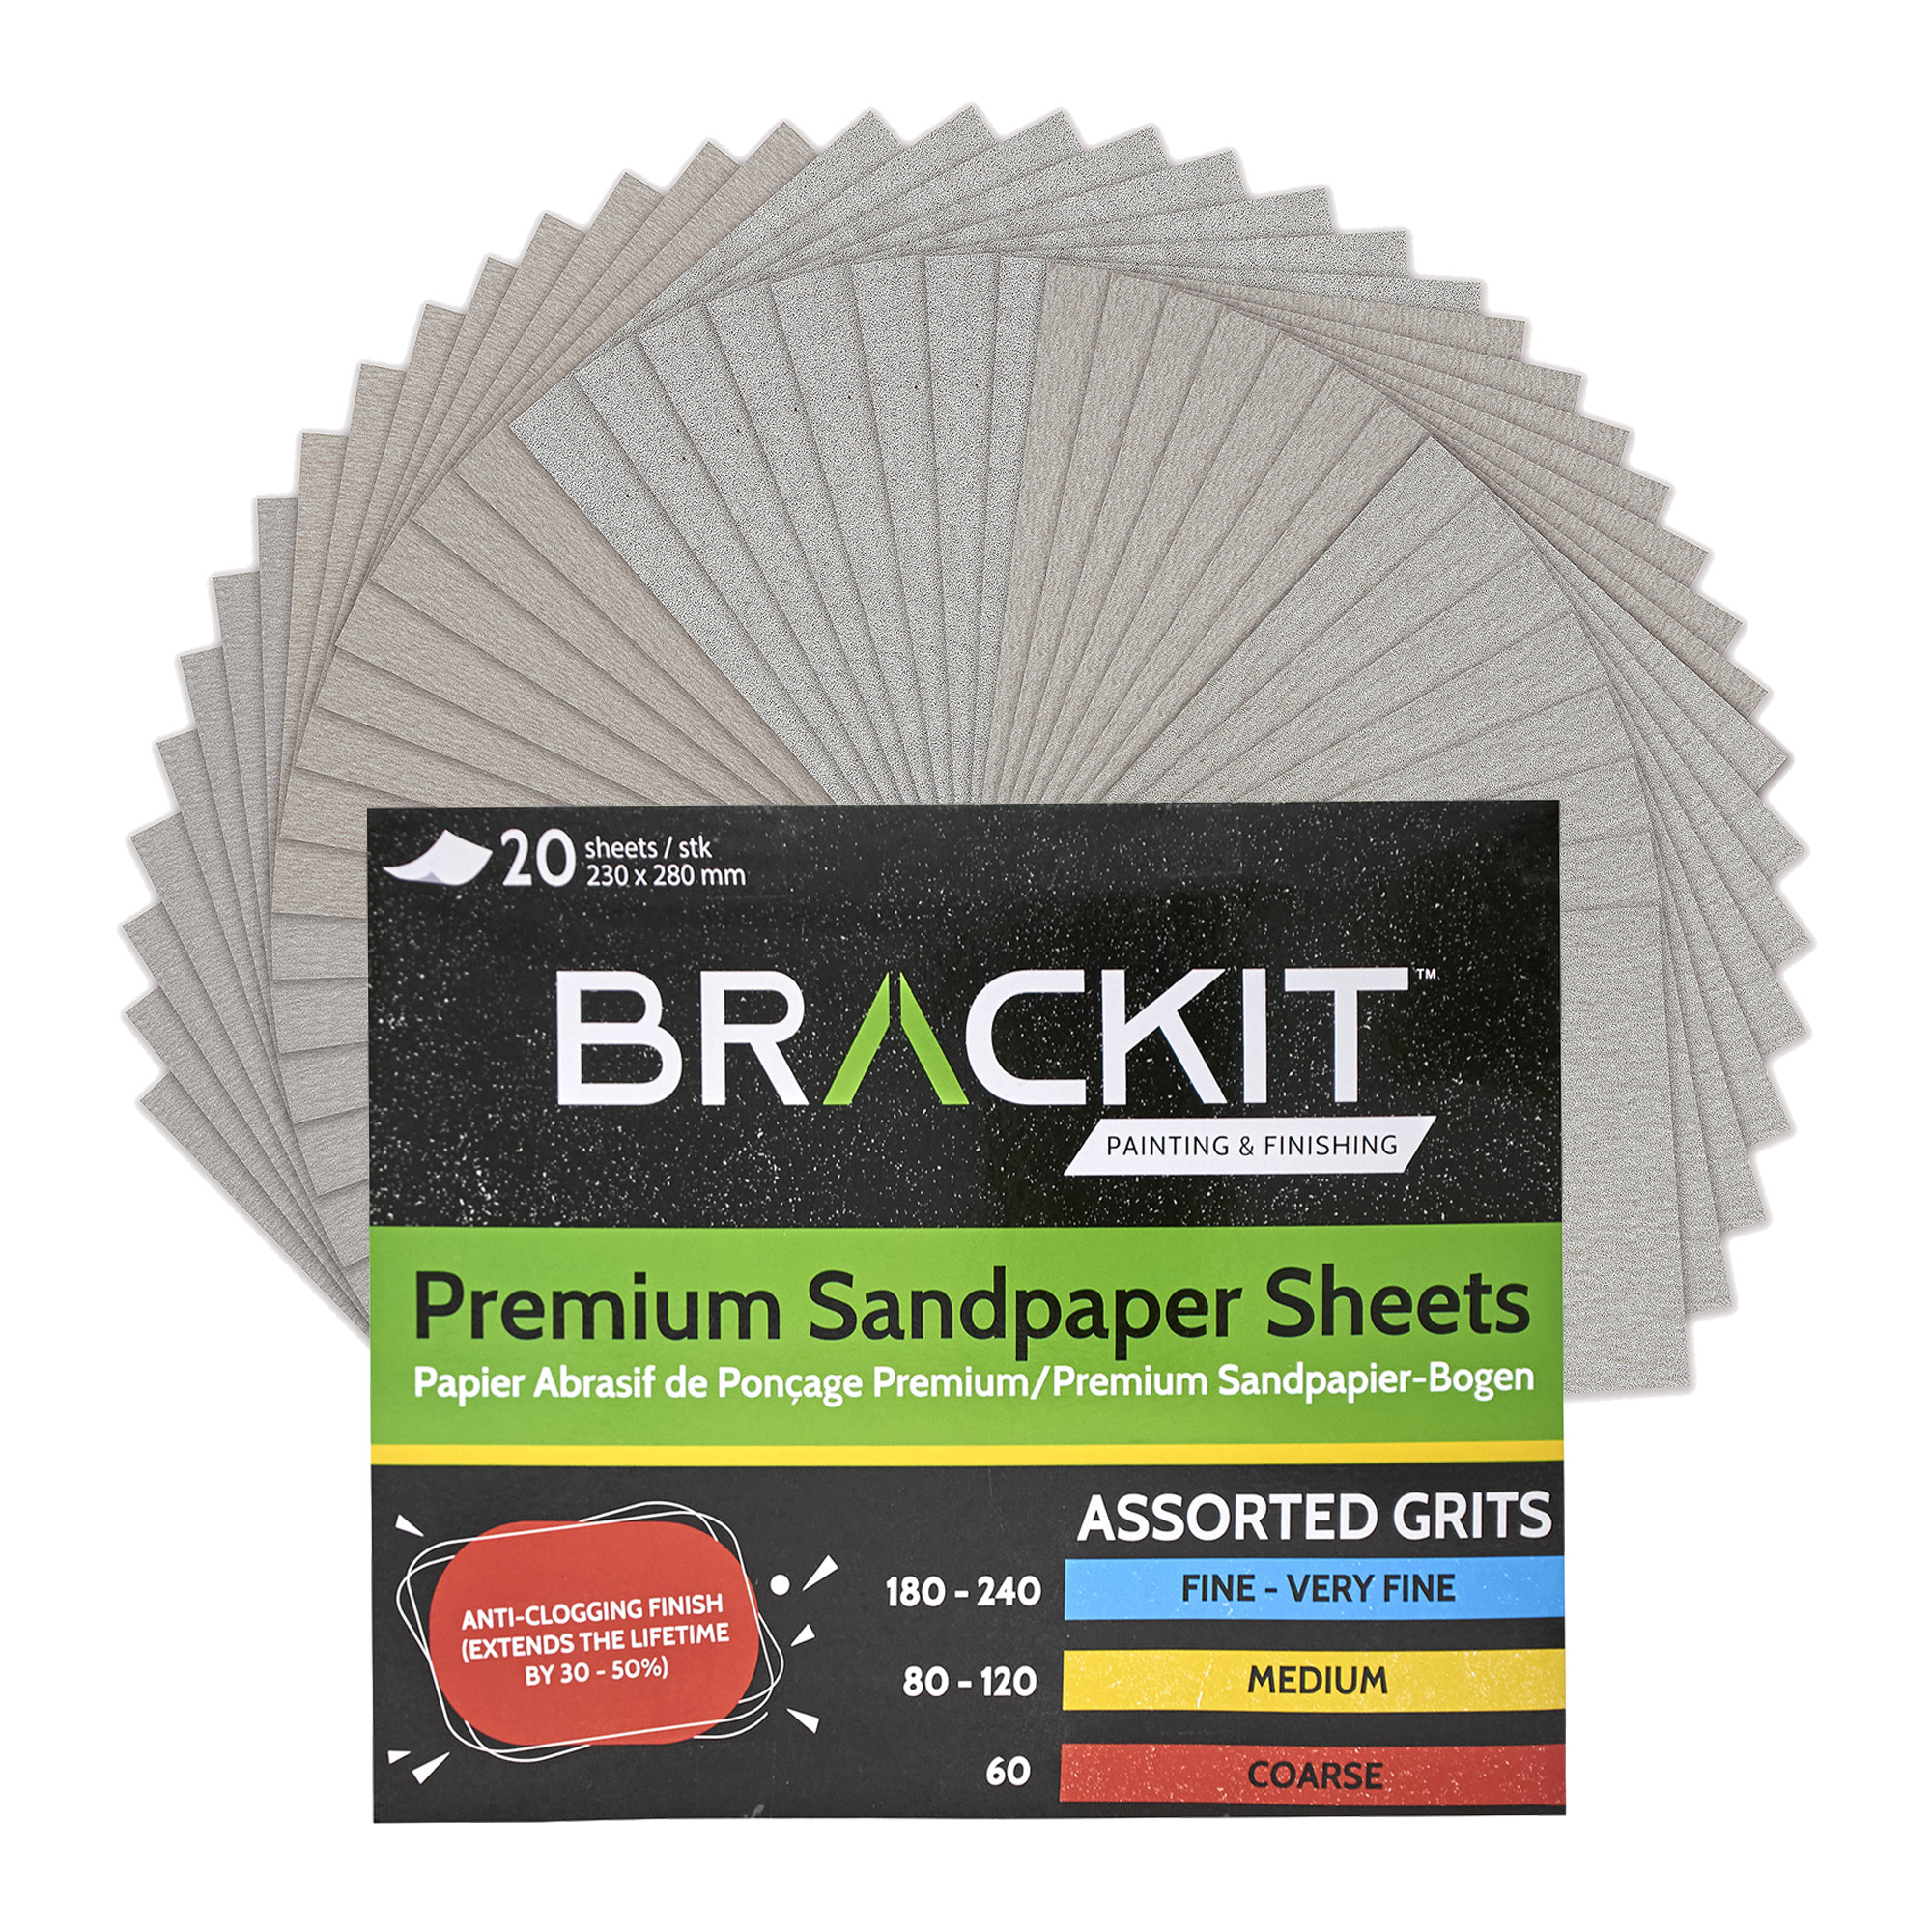 JOBLOT OF 20 packs of Brackit 20 Piece Sandpaper Sheet Set - Assorted Grits 60, 80, 120, 180, 240 - Anti-Clogging Finish and Longer Lifetime - Multipu